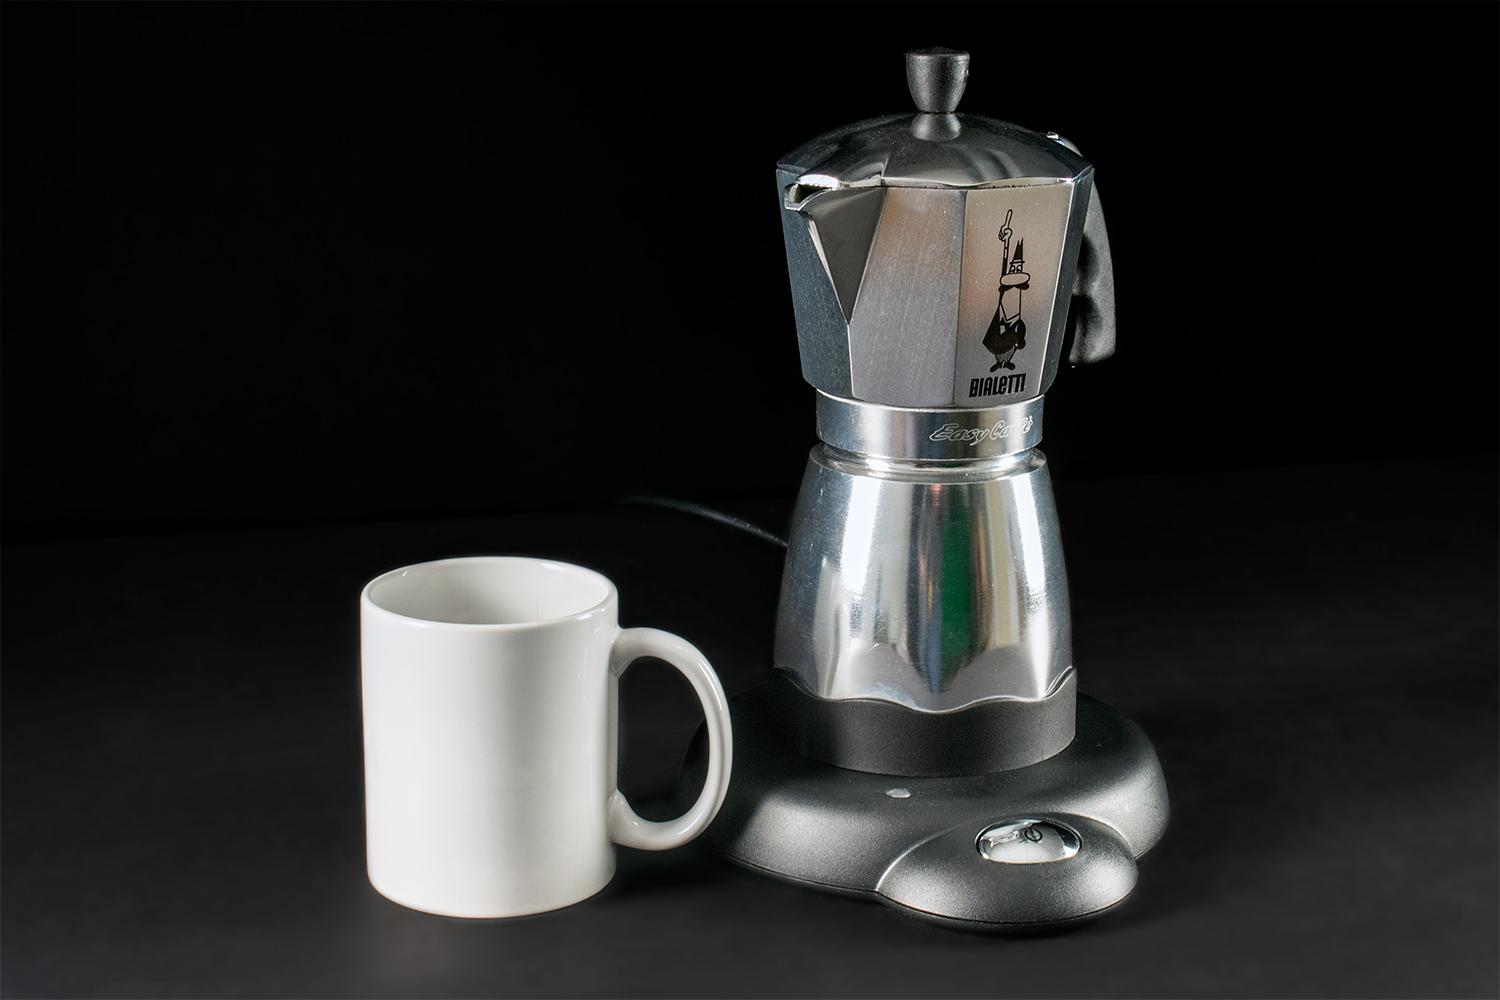 Kloc Coffee Maker, Espresso, 1 Cup